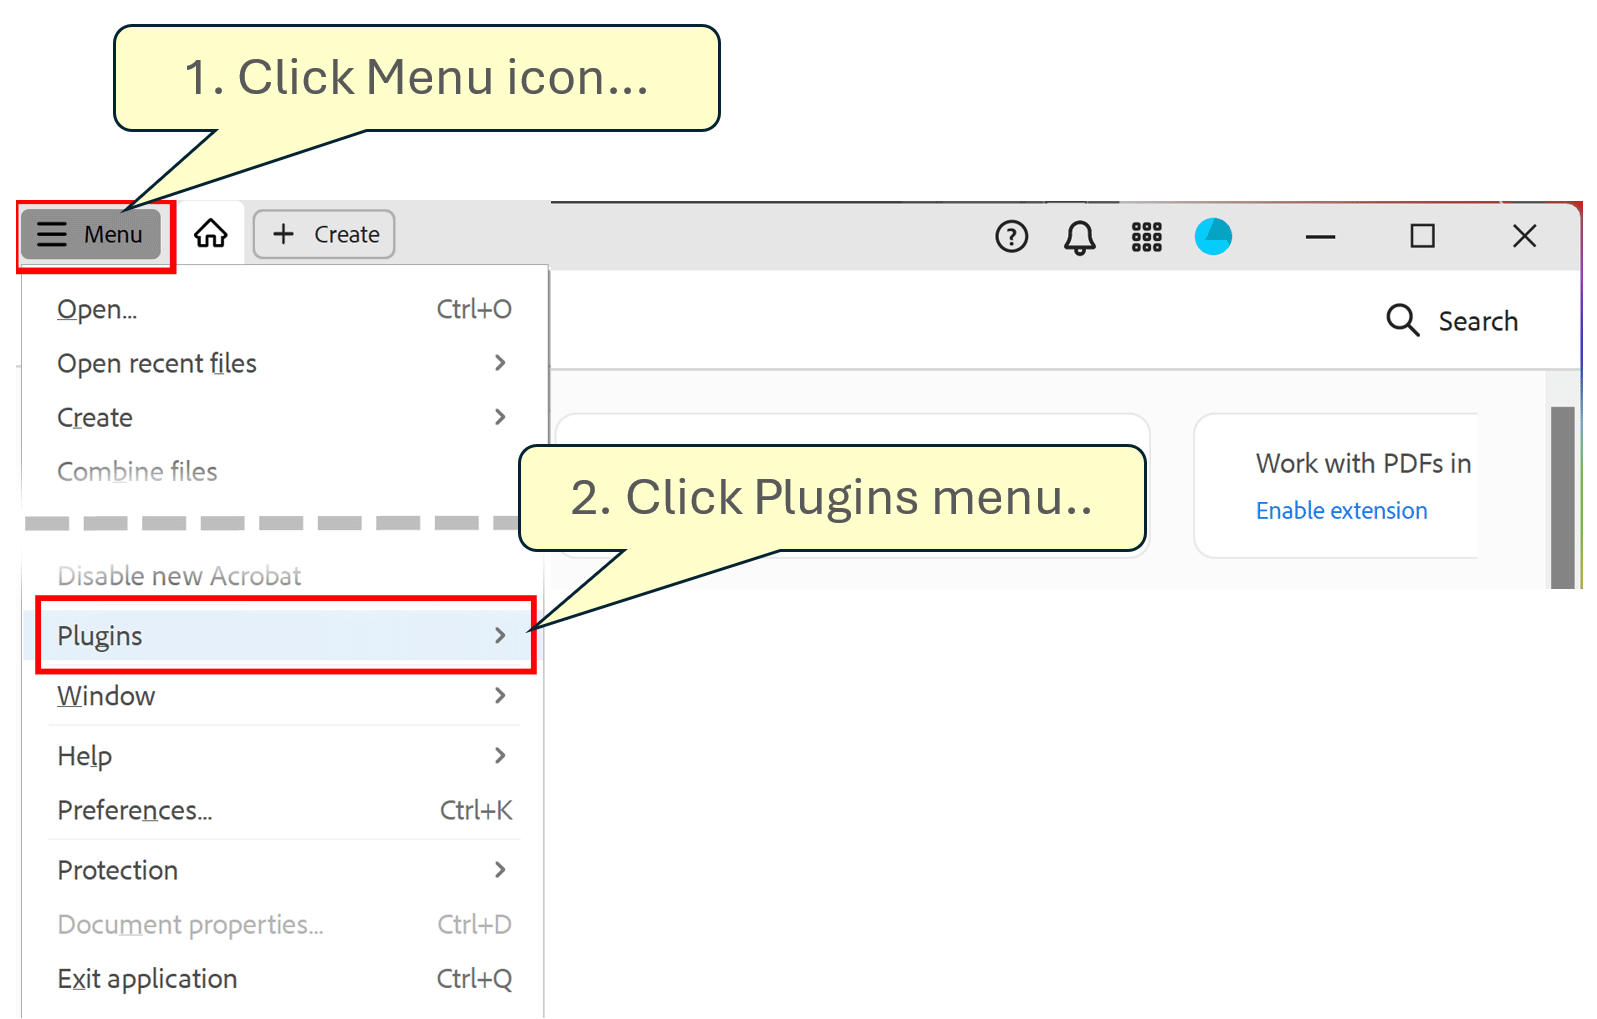 How to find Plugins menu in new Adobe Acrobat interface